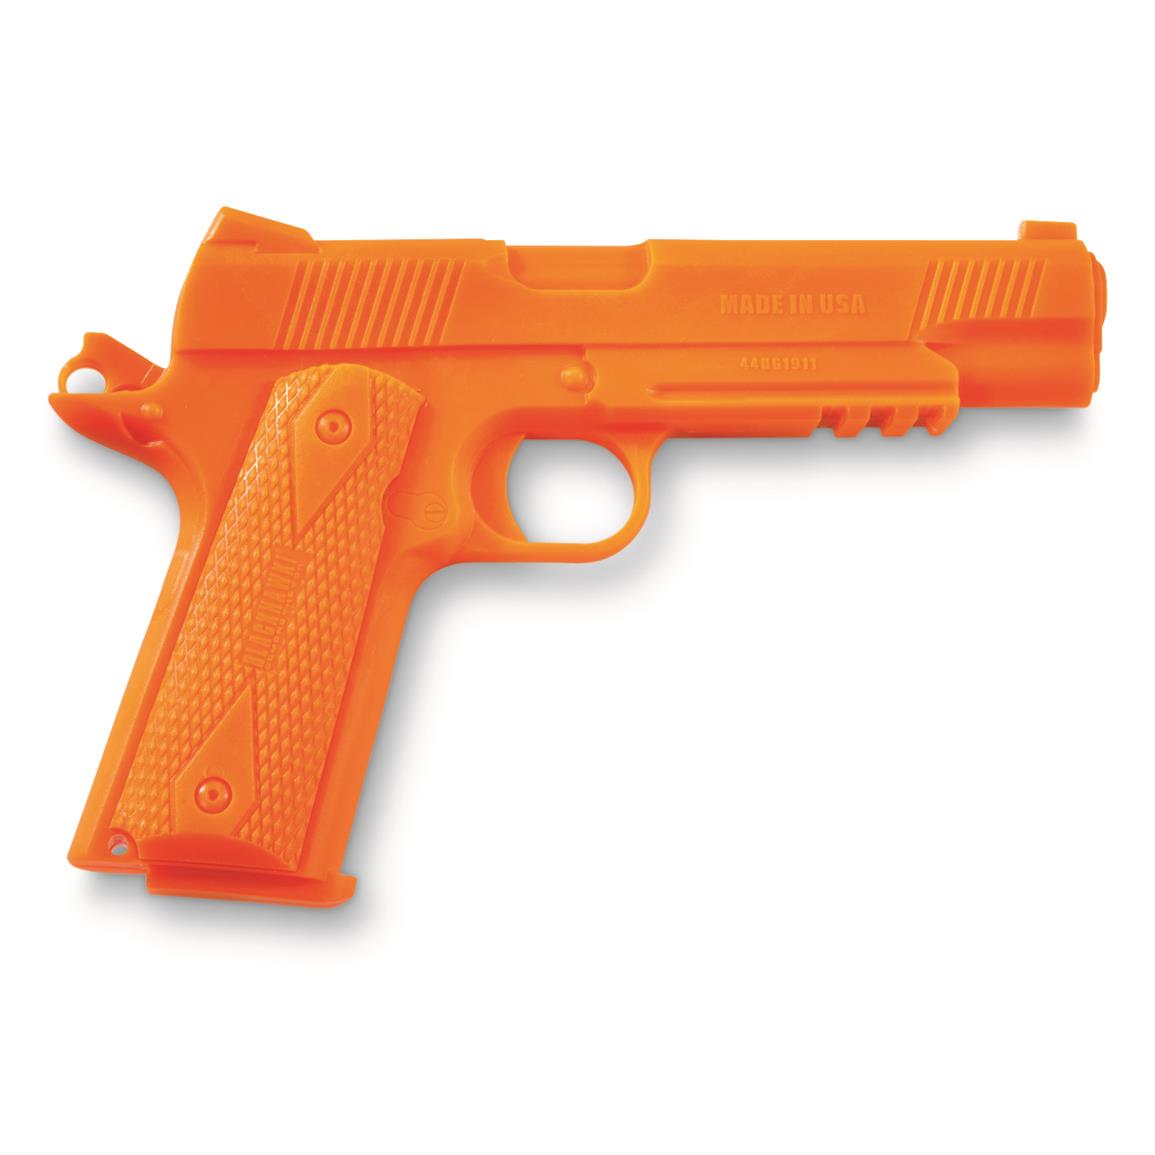 Colt 1911 Blackhawk  Orange Polymer Demonstrator Training Practice Gun 